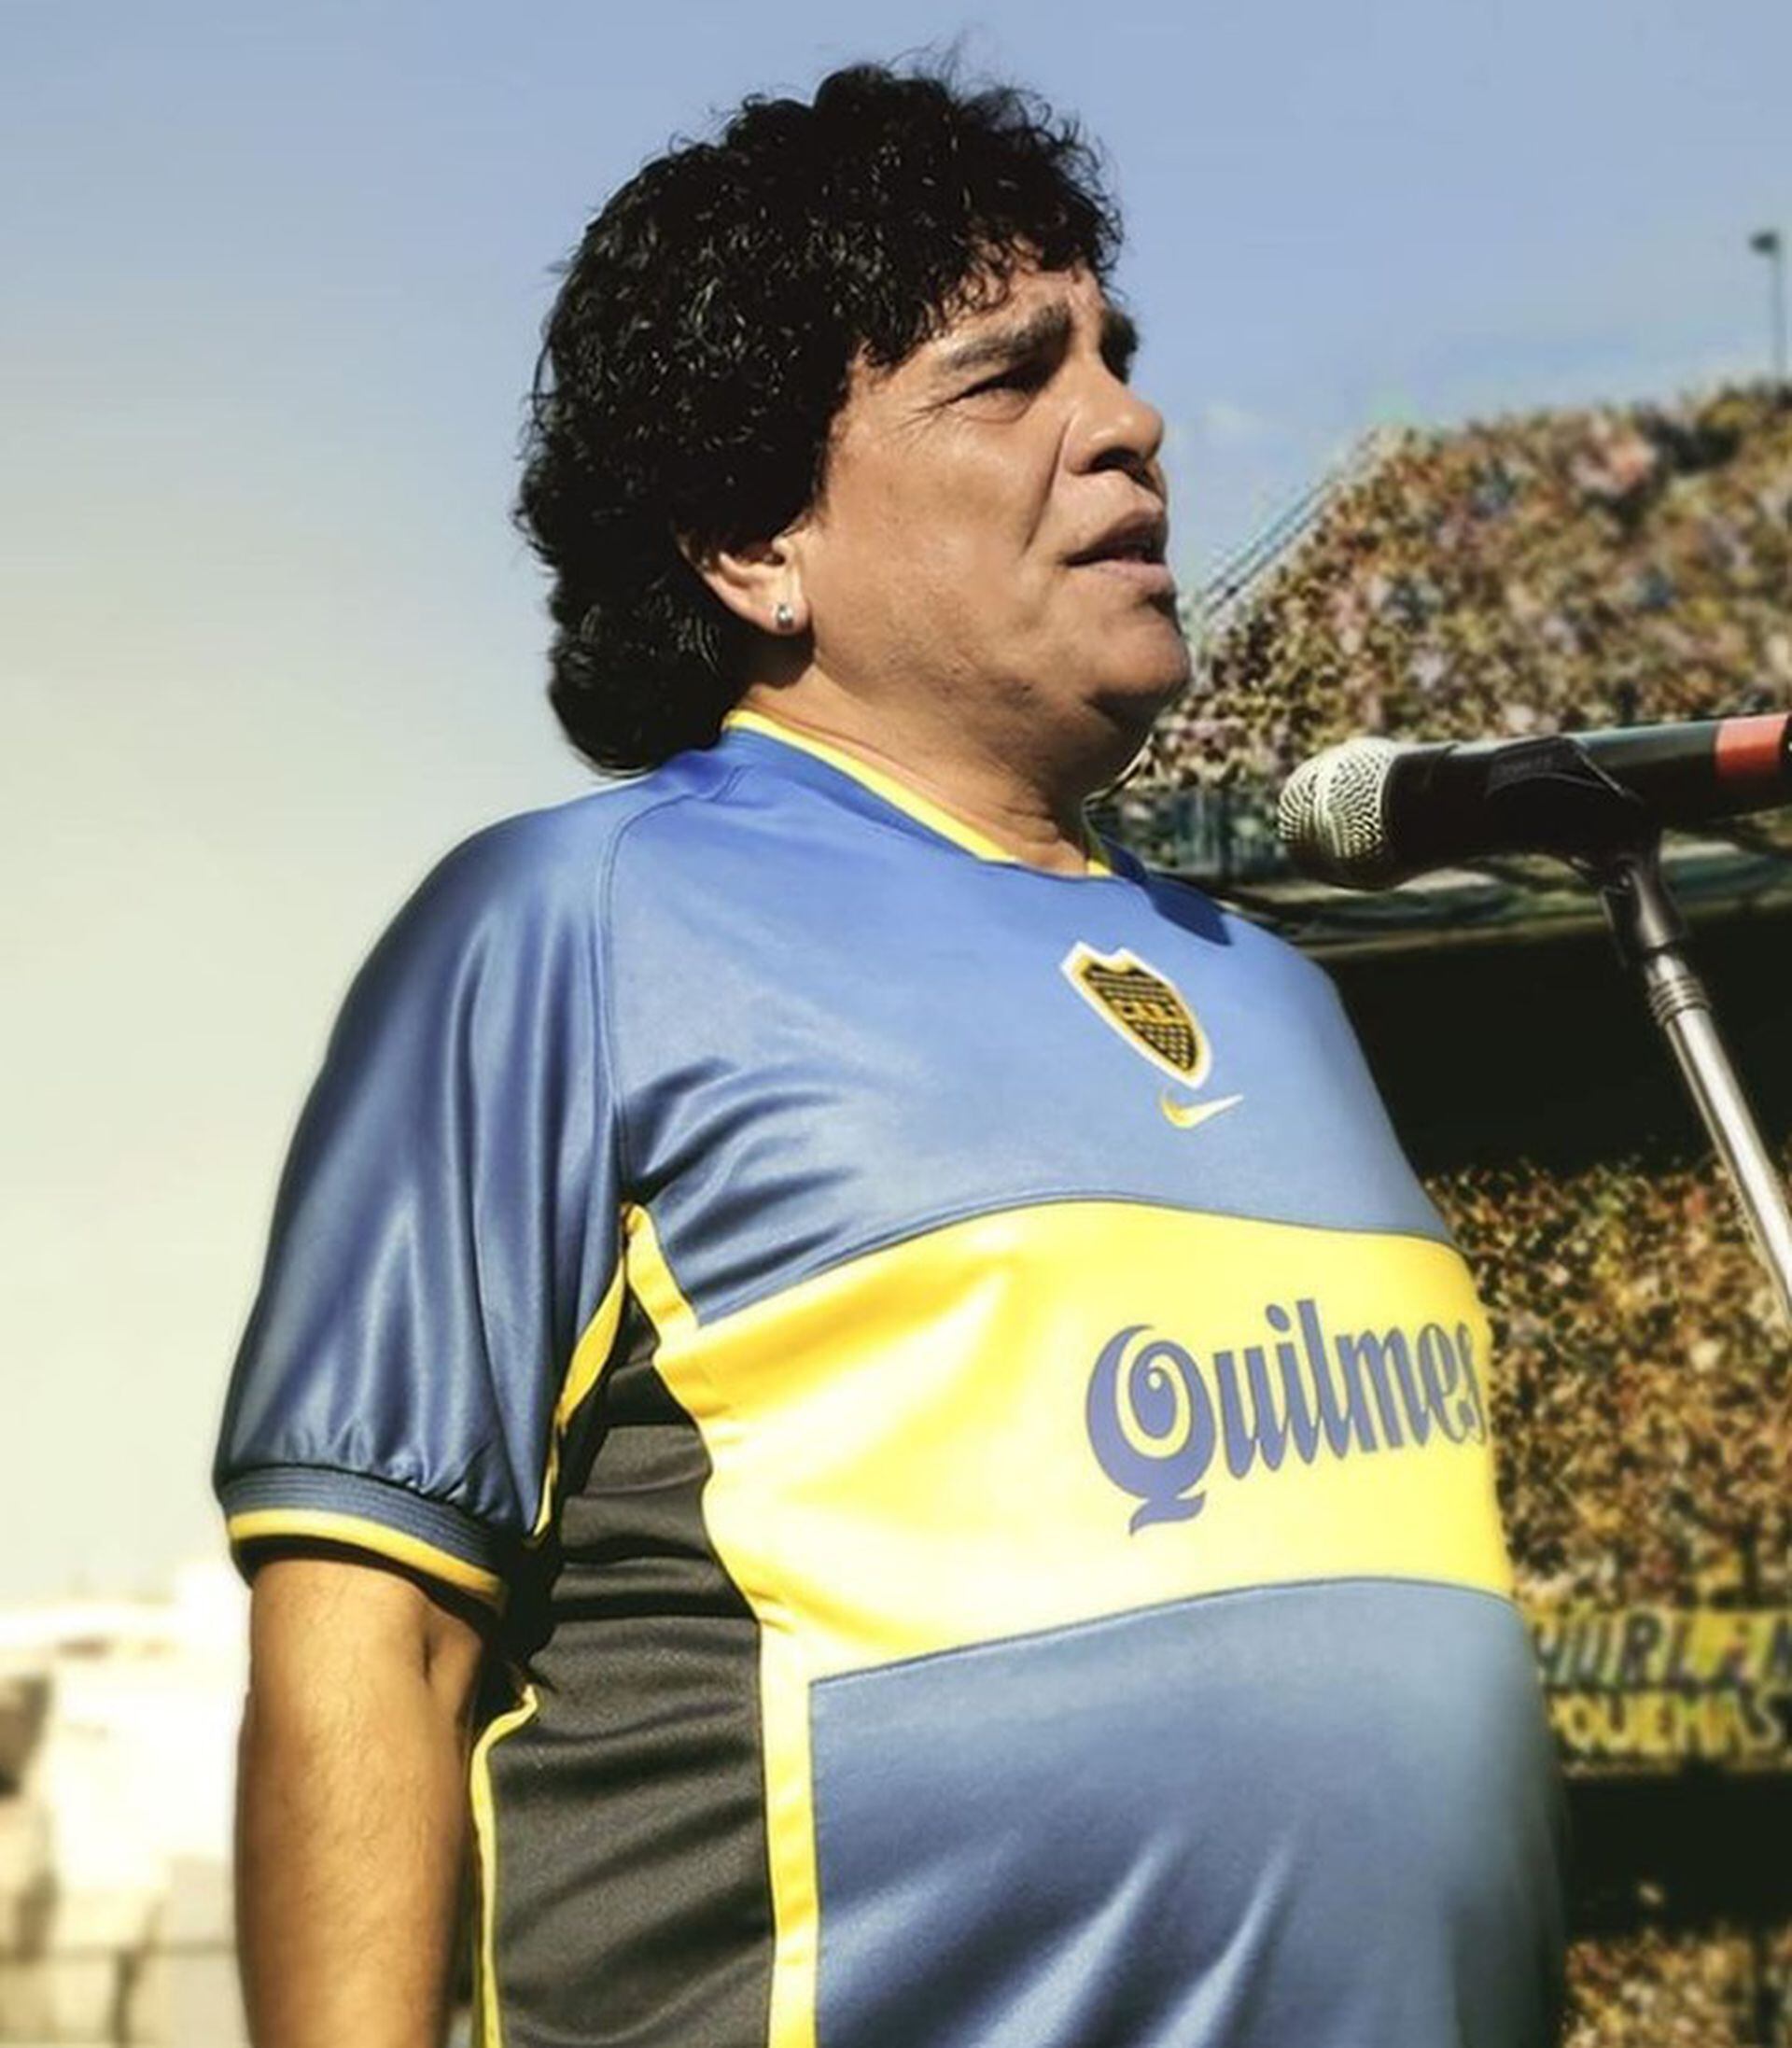 Juan Palomino como Maradona en su despedida del fútbol: "La pelota no se mancha"